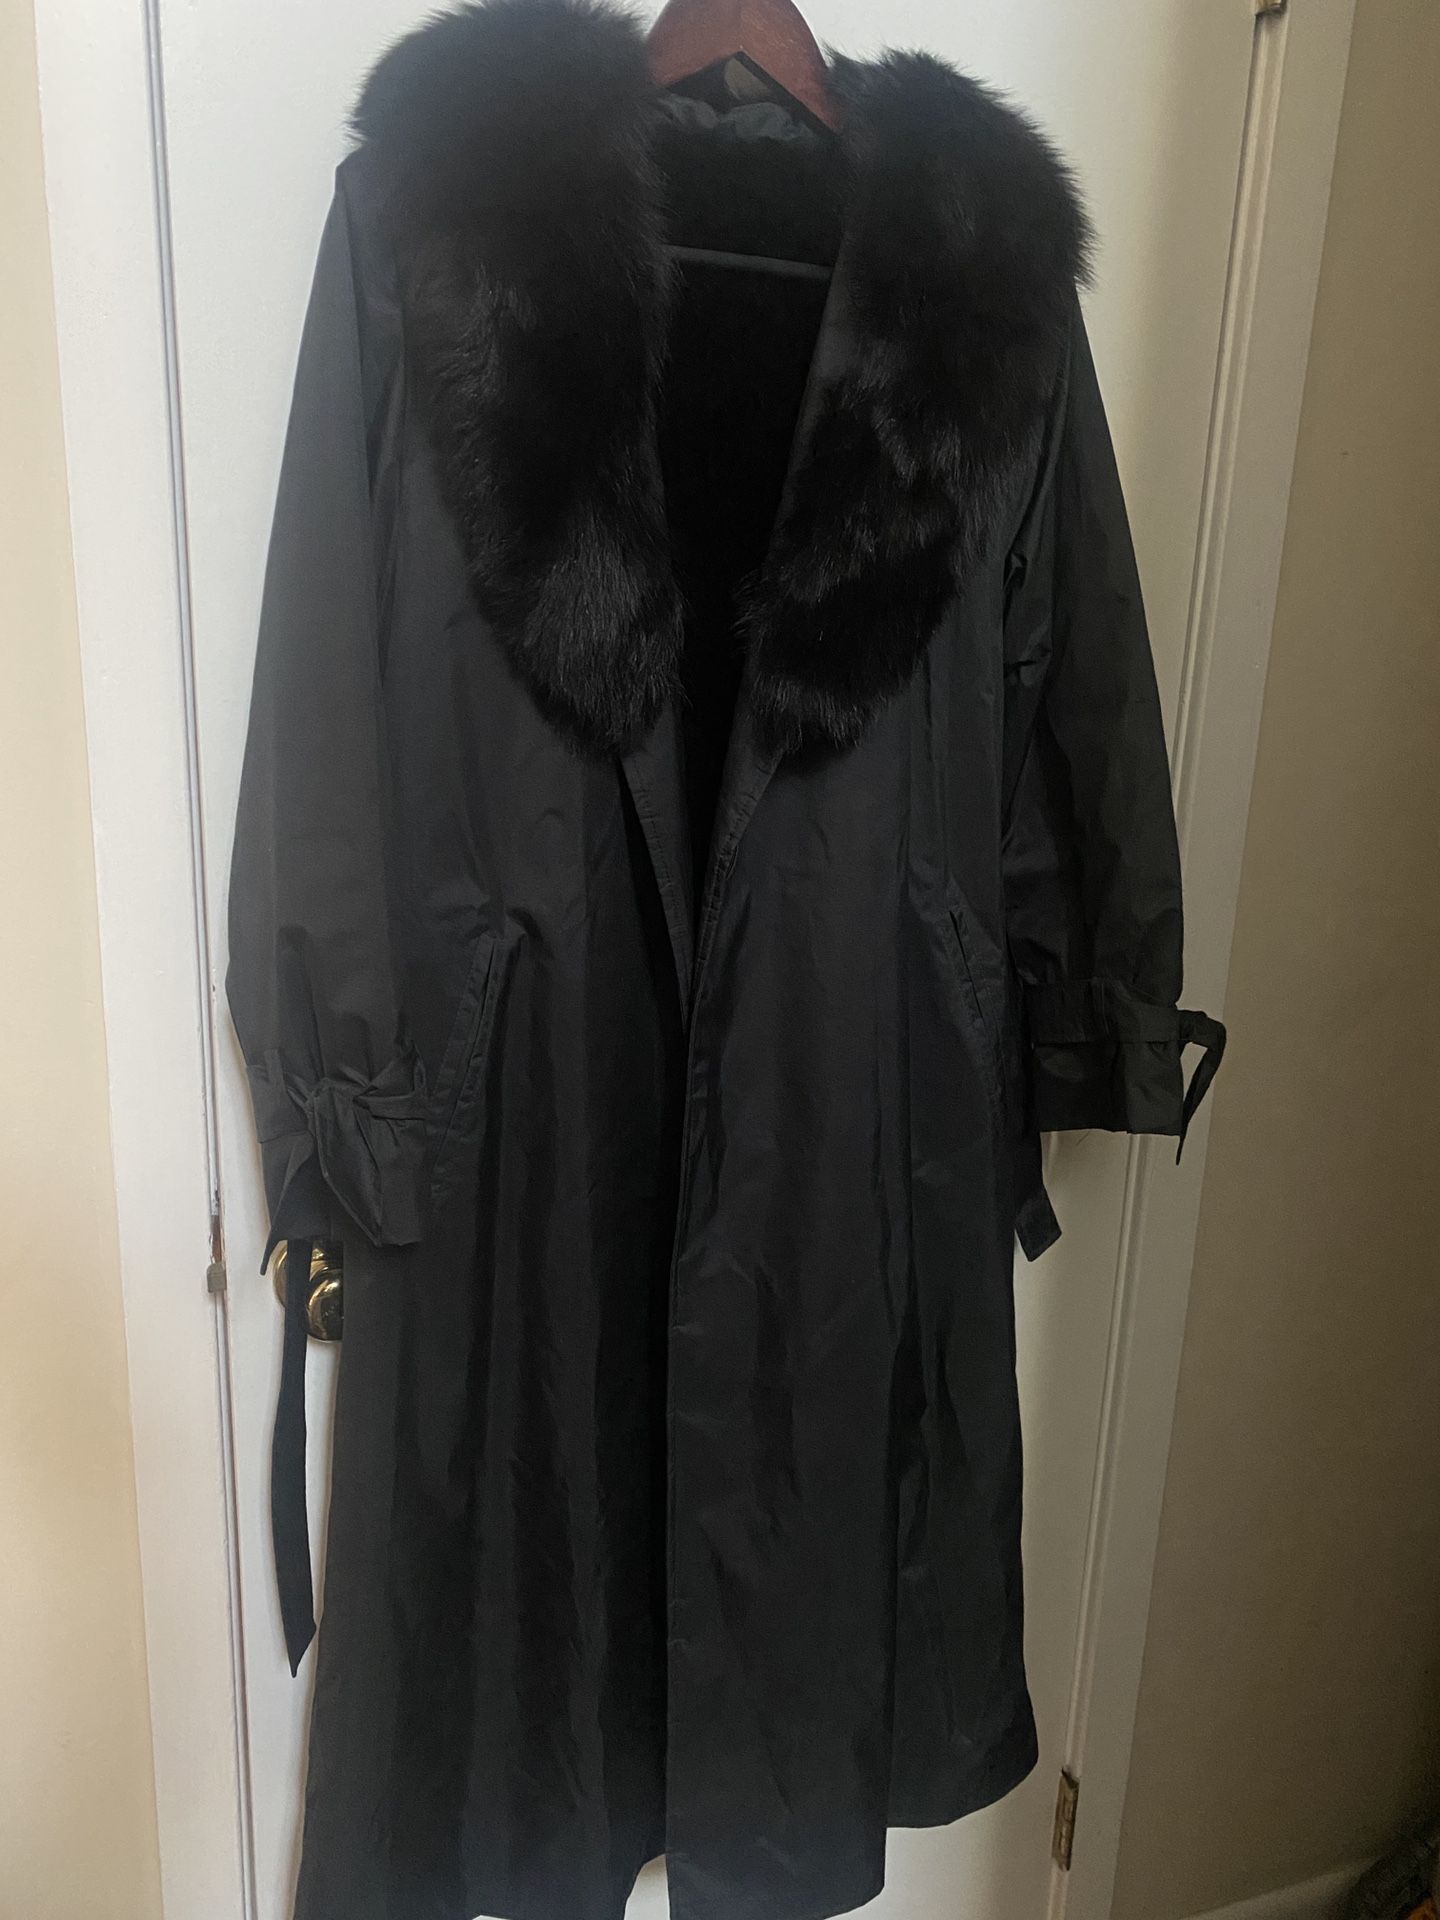 winter wrap rain coat w/faux fur collar, fully lined 